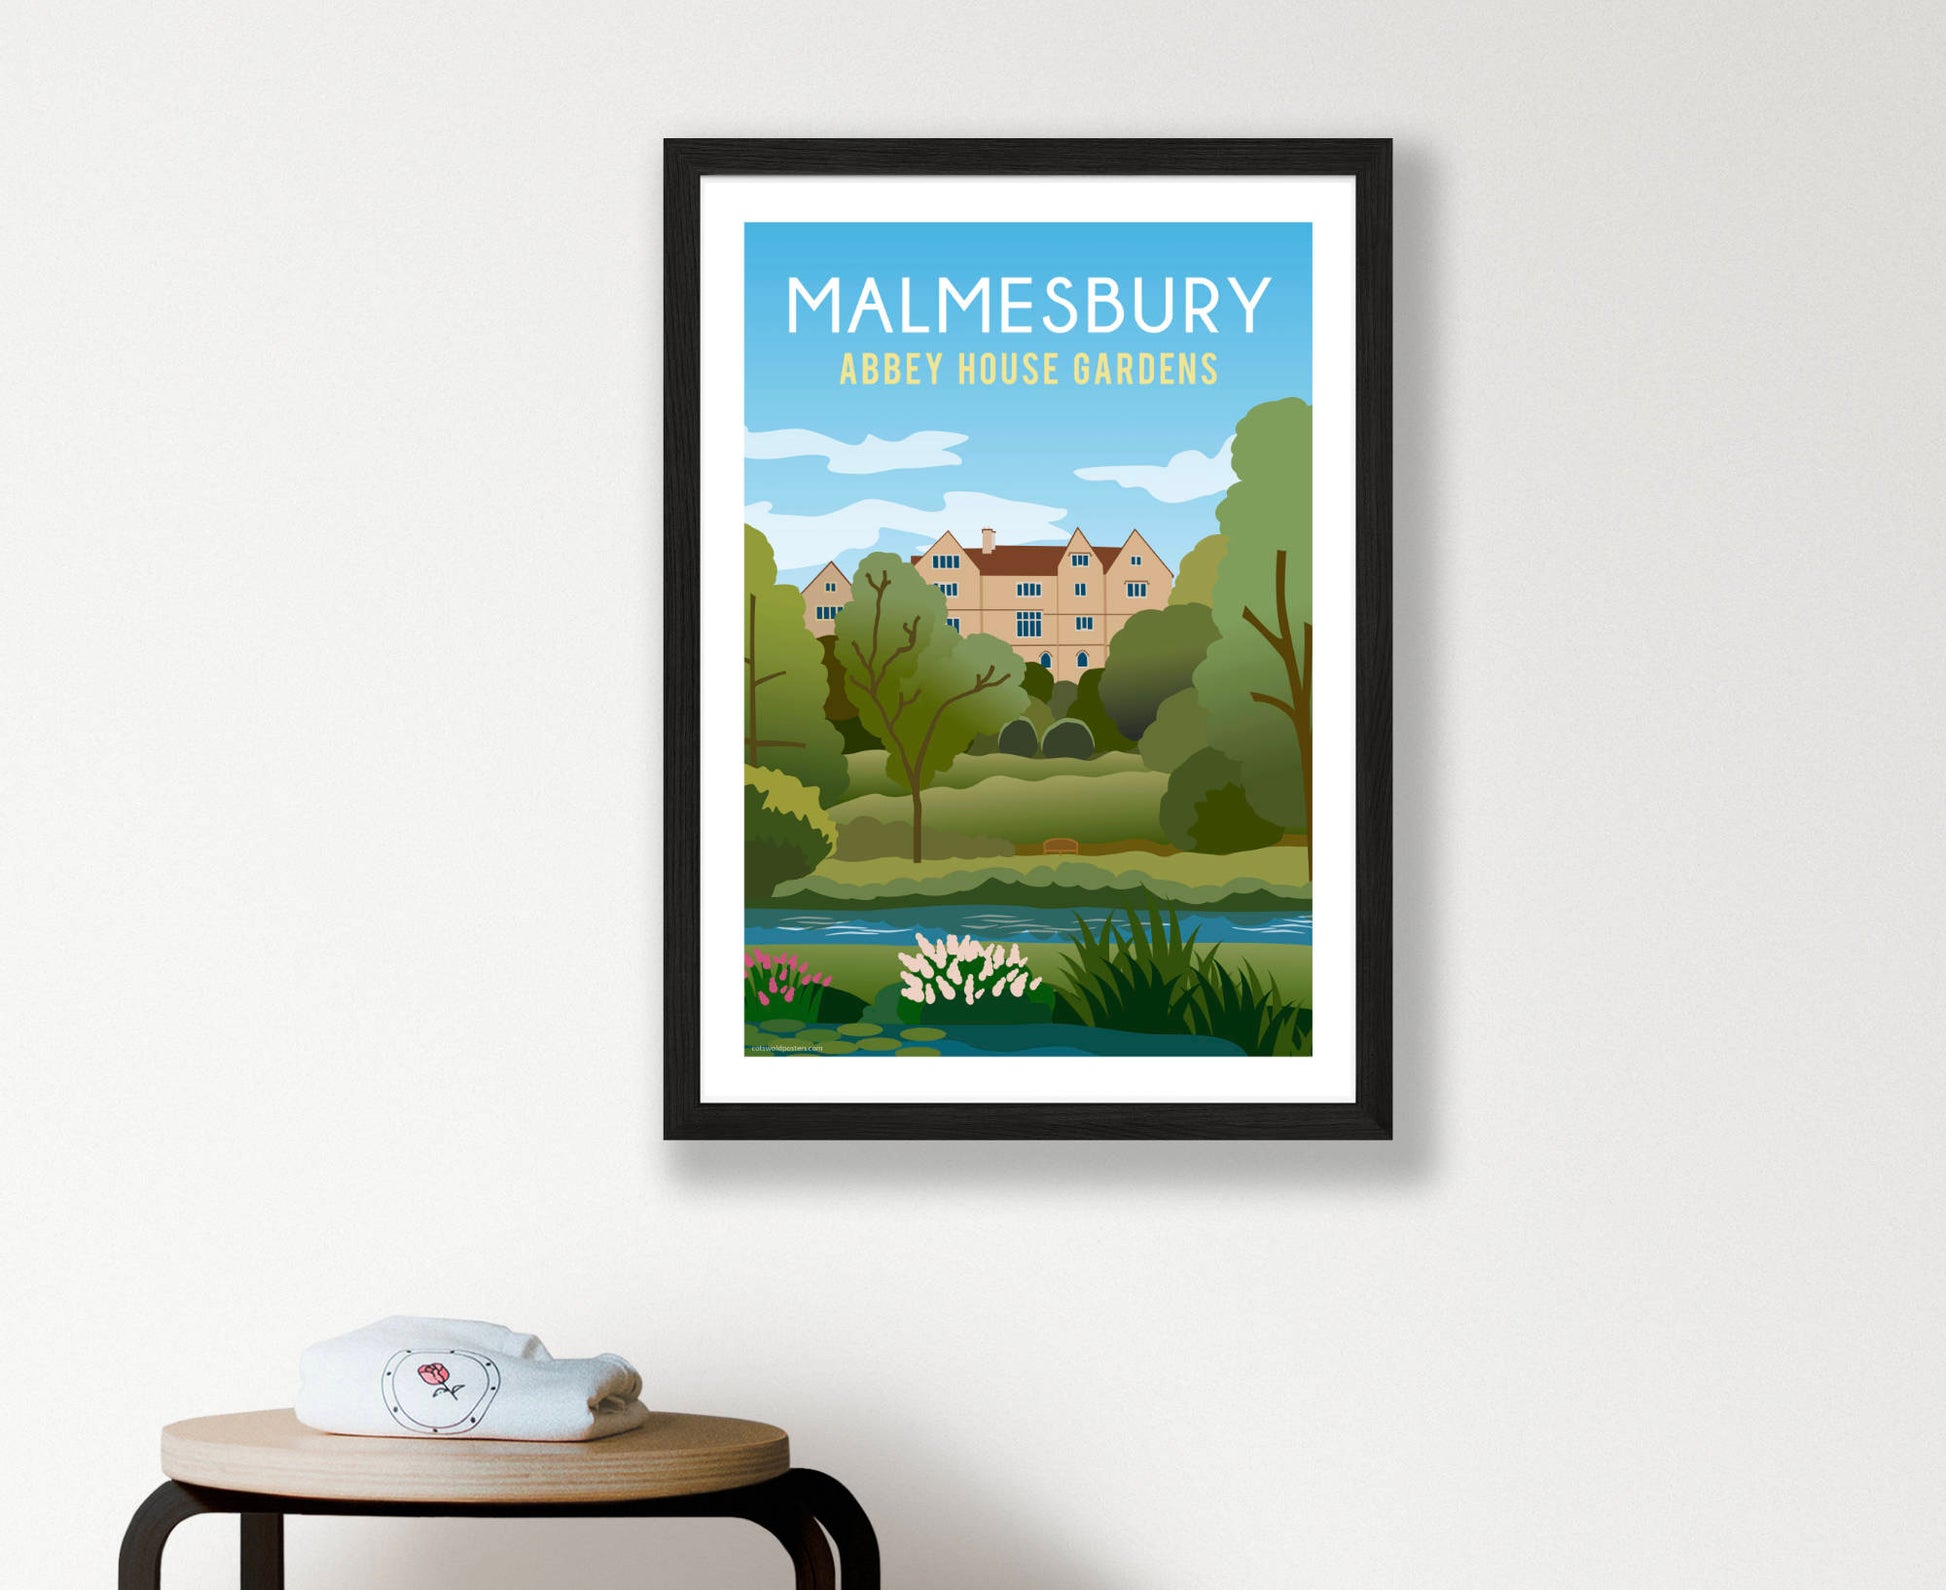 Malmesbury Abbey House Gardens Poster in black frame